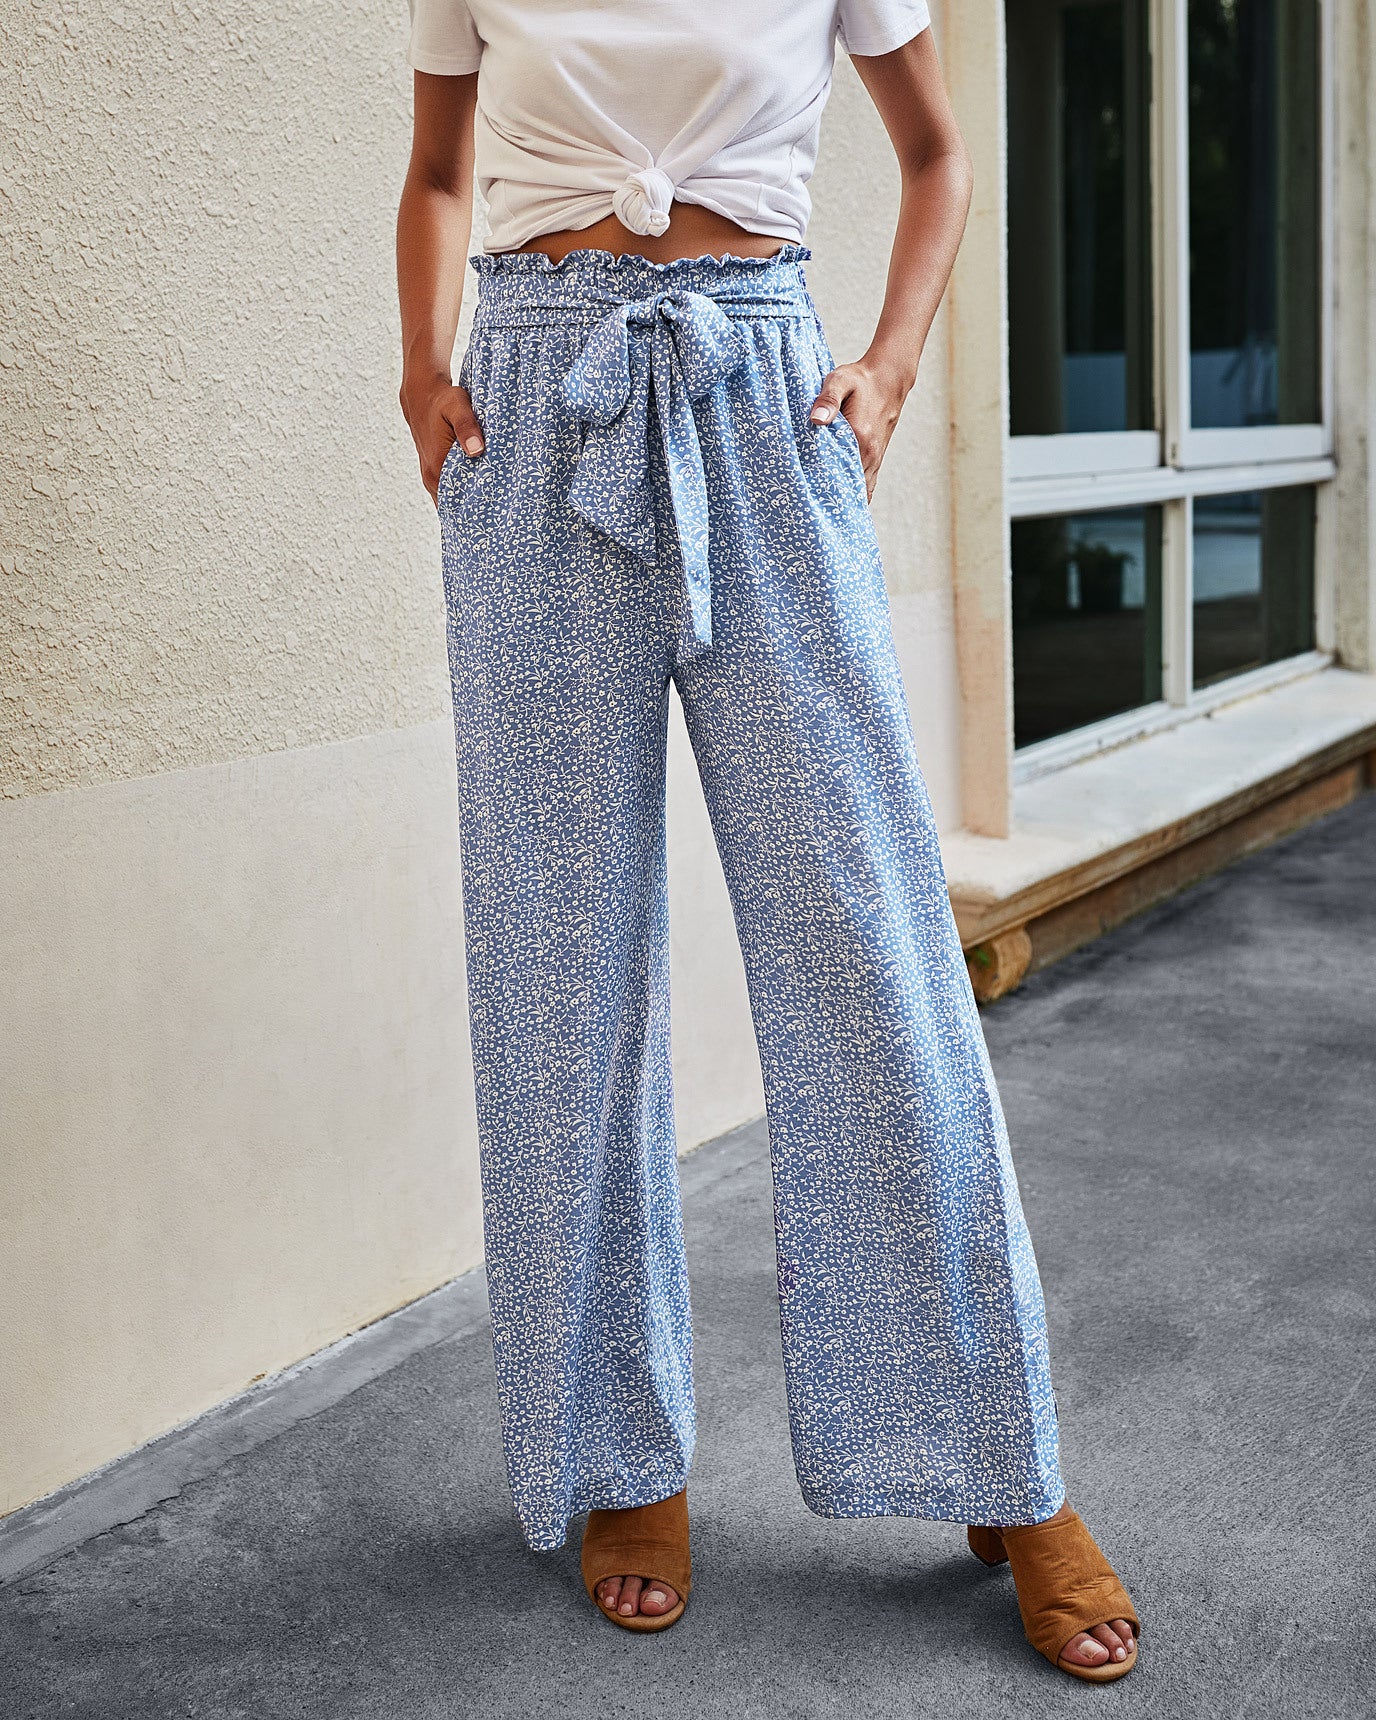 Women's Fashionable Leopard Print Lace-up Wide-leg Trousers